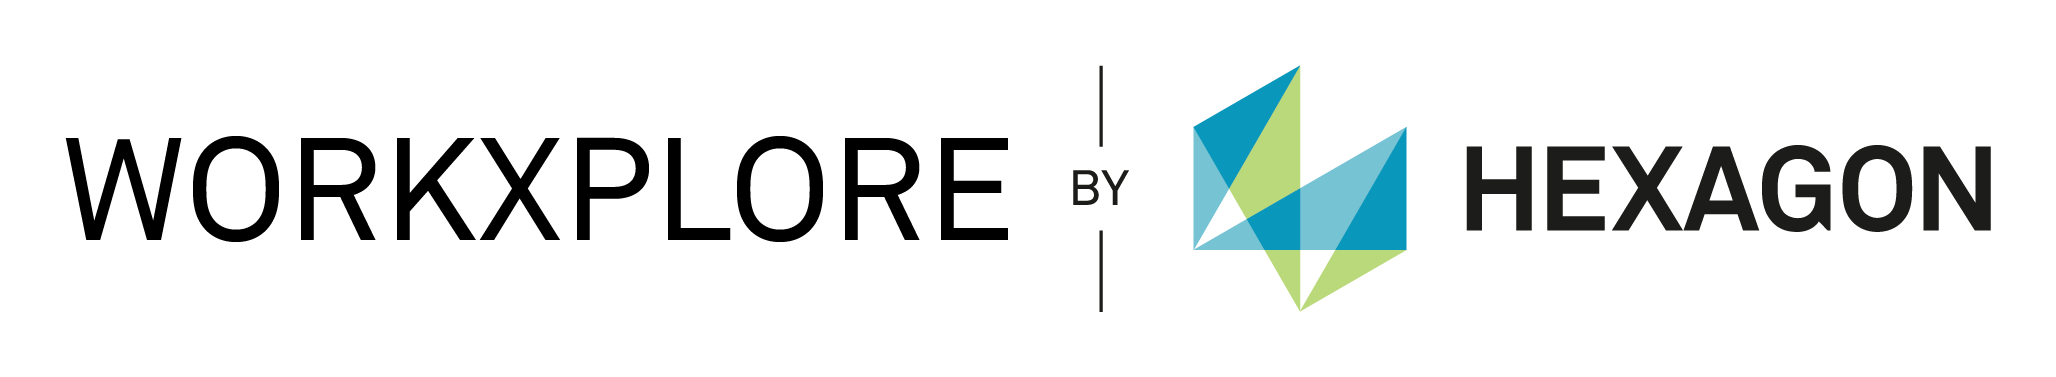 Hexagon WORKXPLORE logo